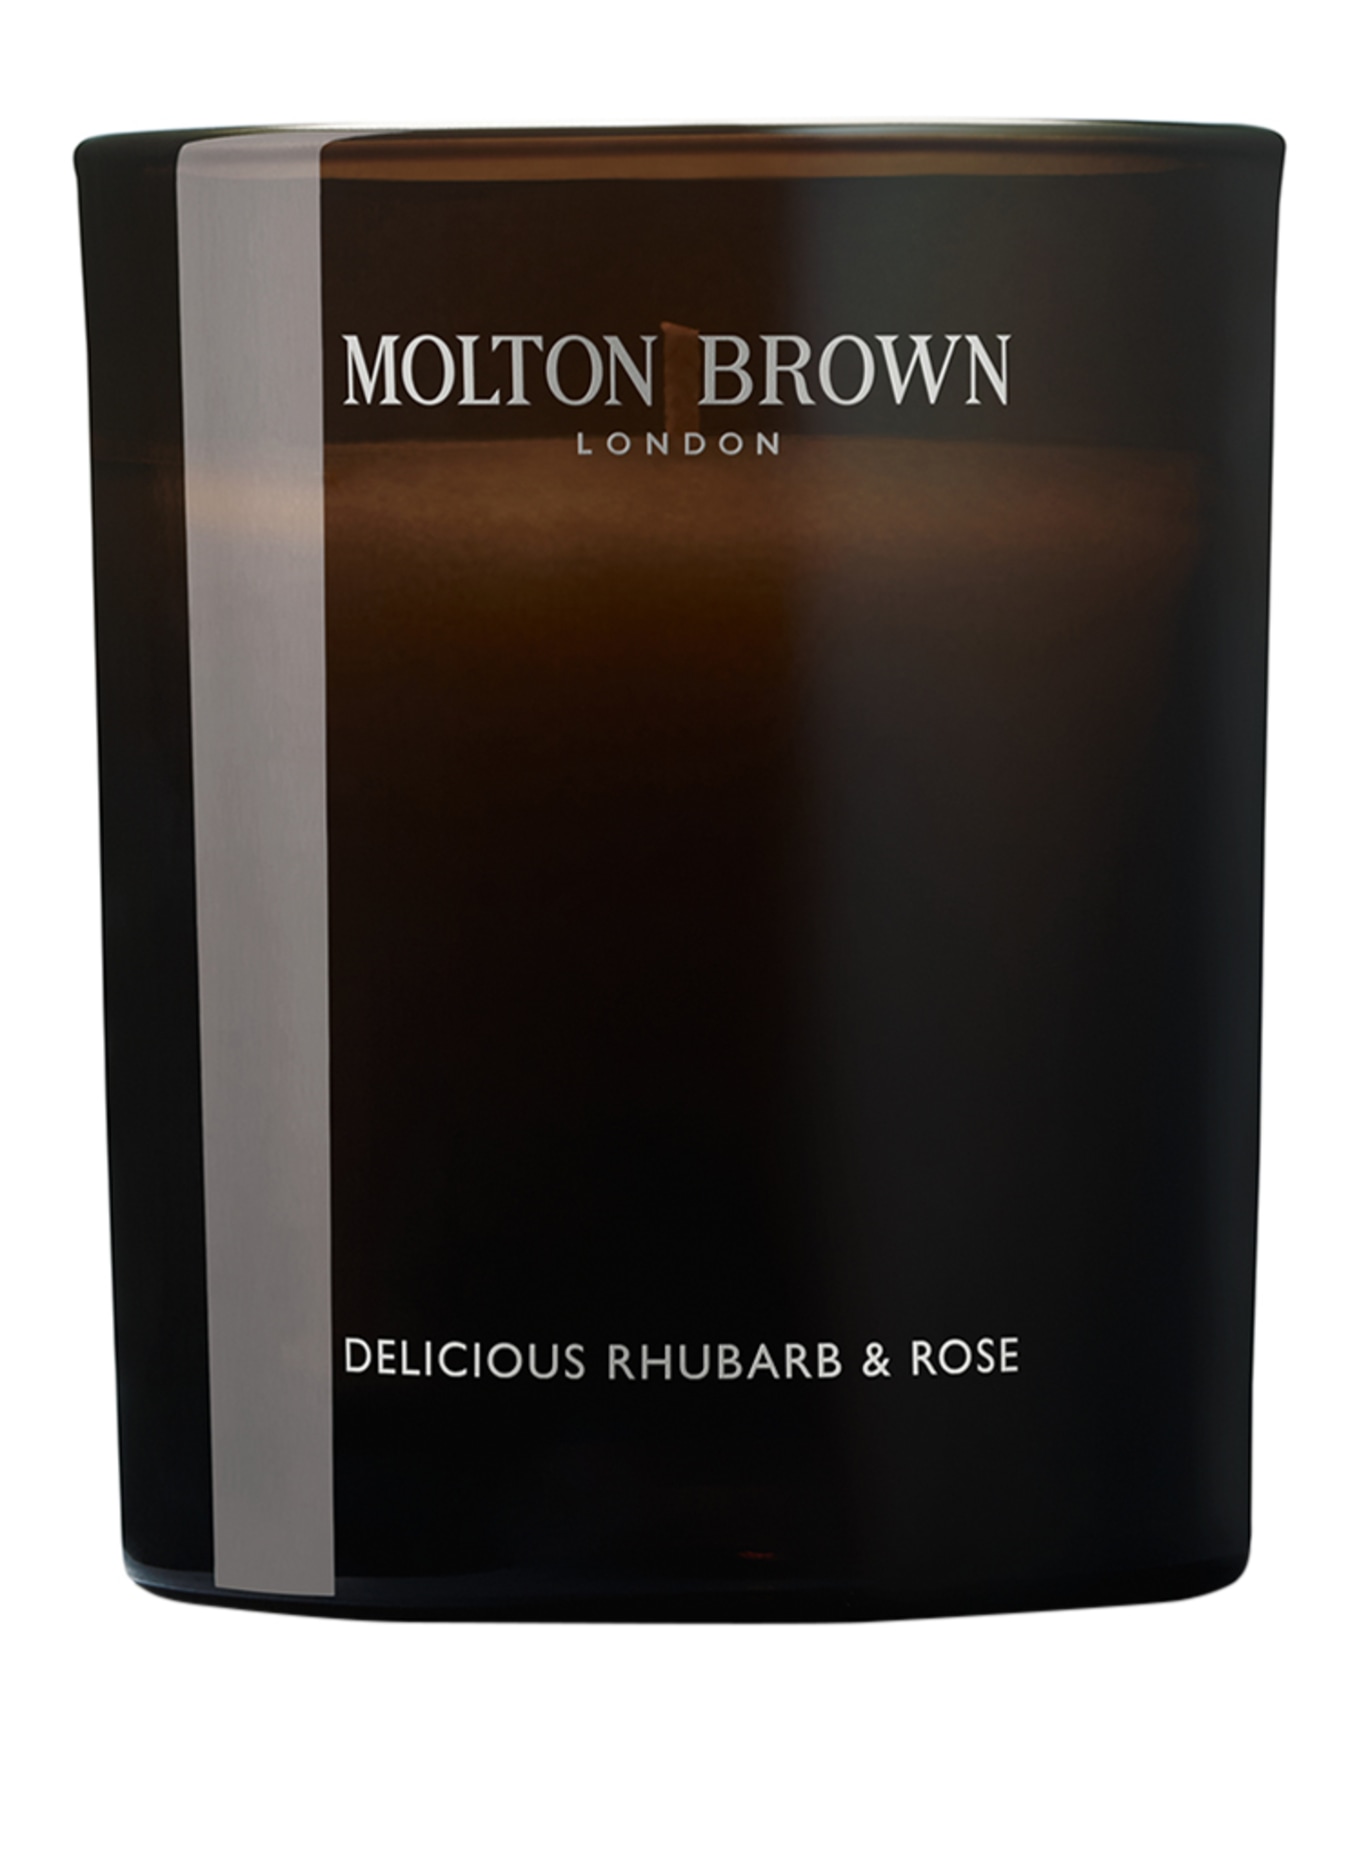 MOLTON BROWN DELICIOUS RHUBARB & ROSE (Obrázek 1)